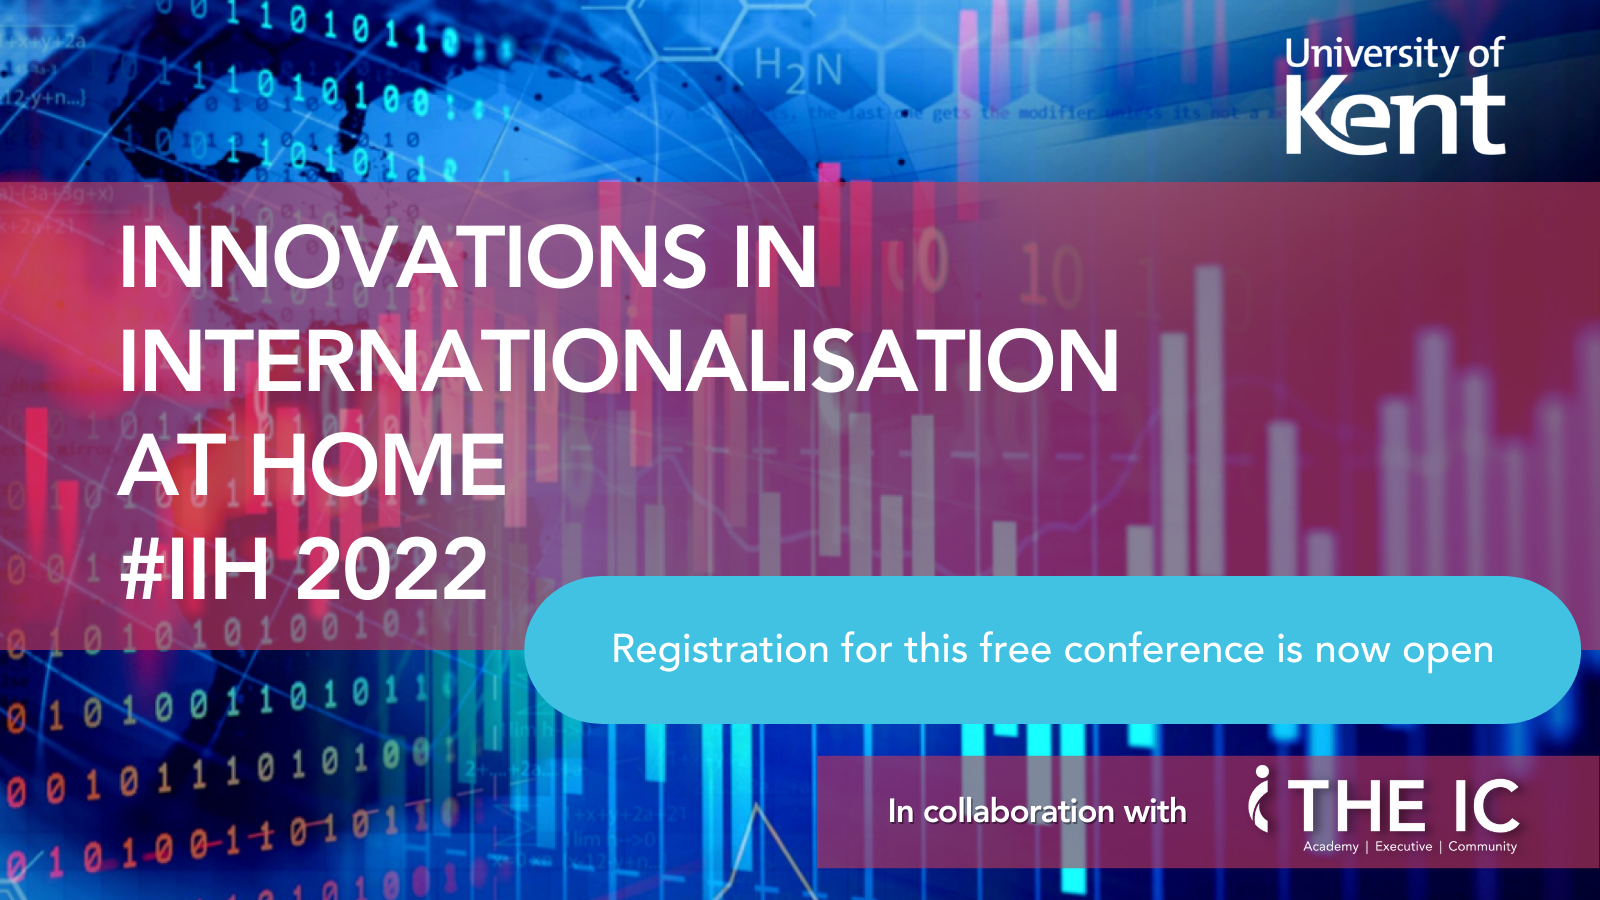 Innovations in Internationalisation at Home #IIH 2022